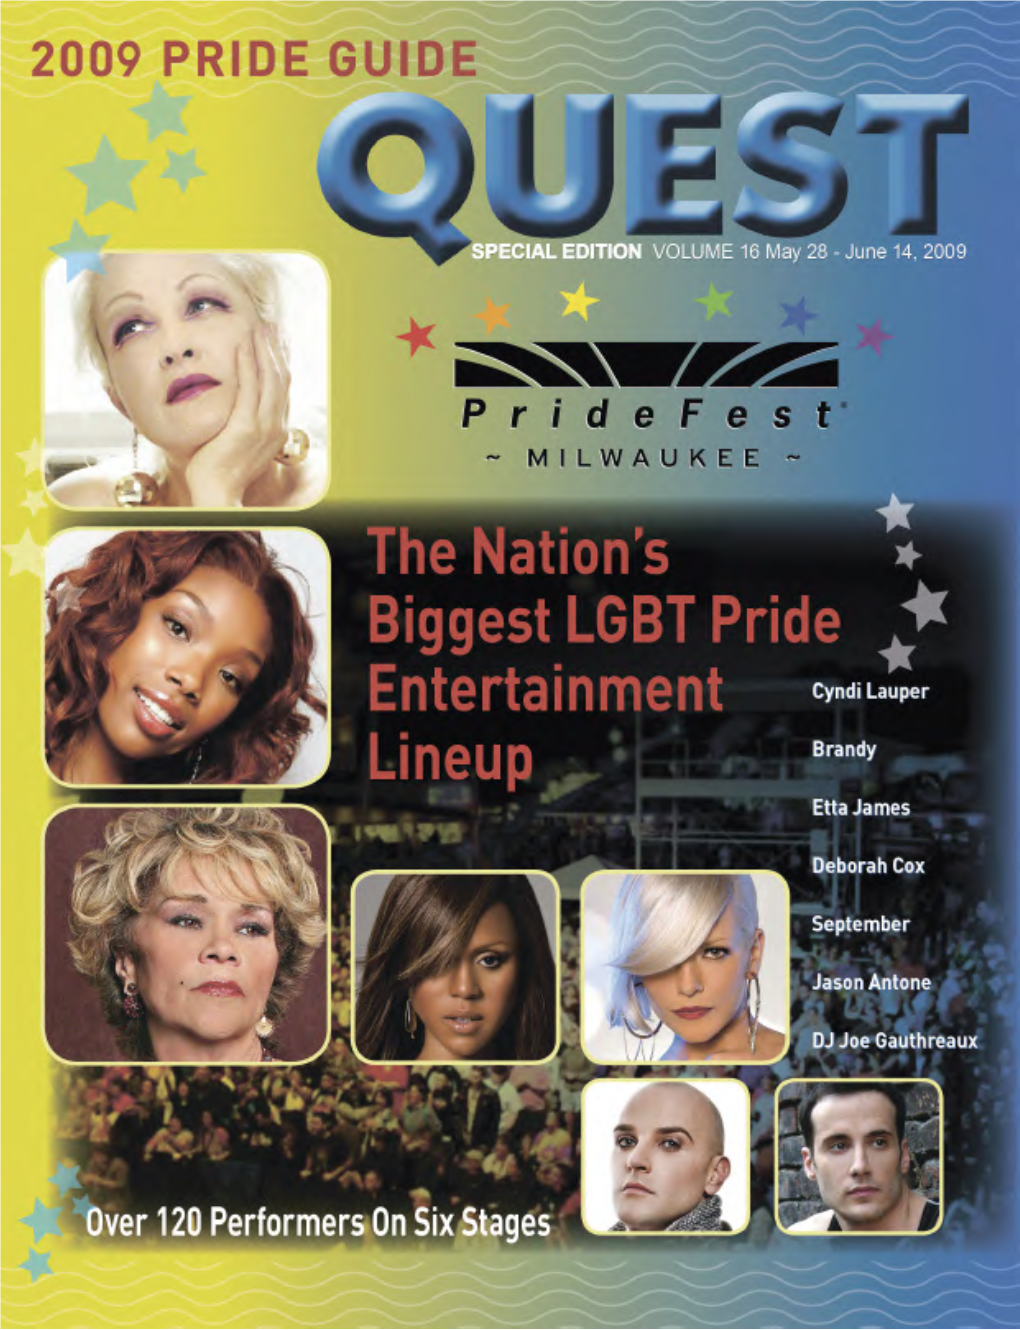 Pridefest Pride Guide 2009